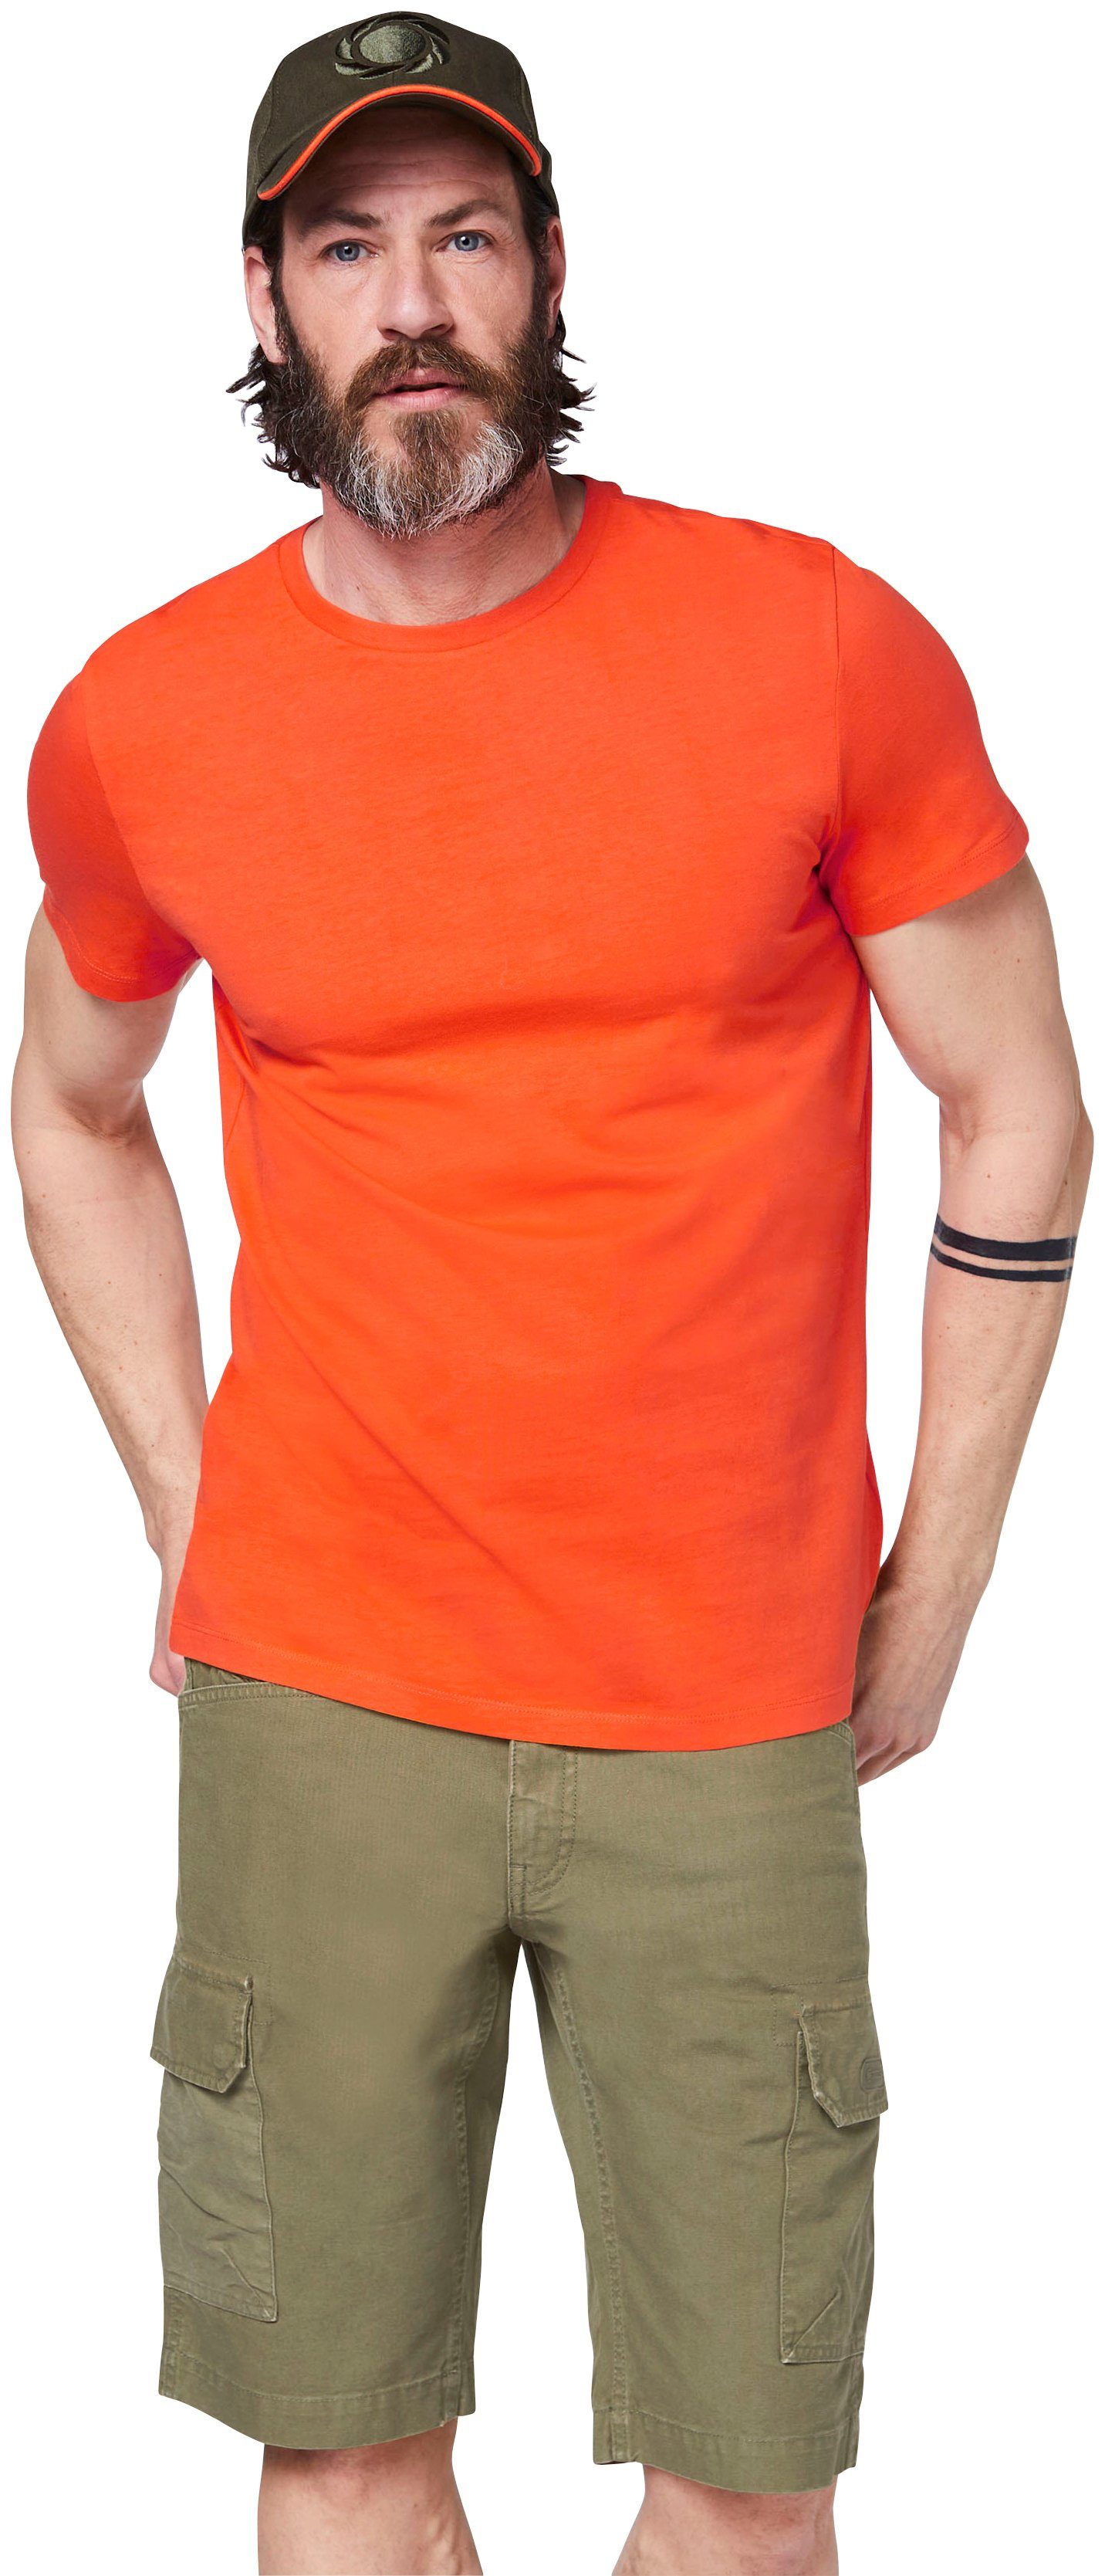 GARDENA T-Shirt Flame unifarben